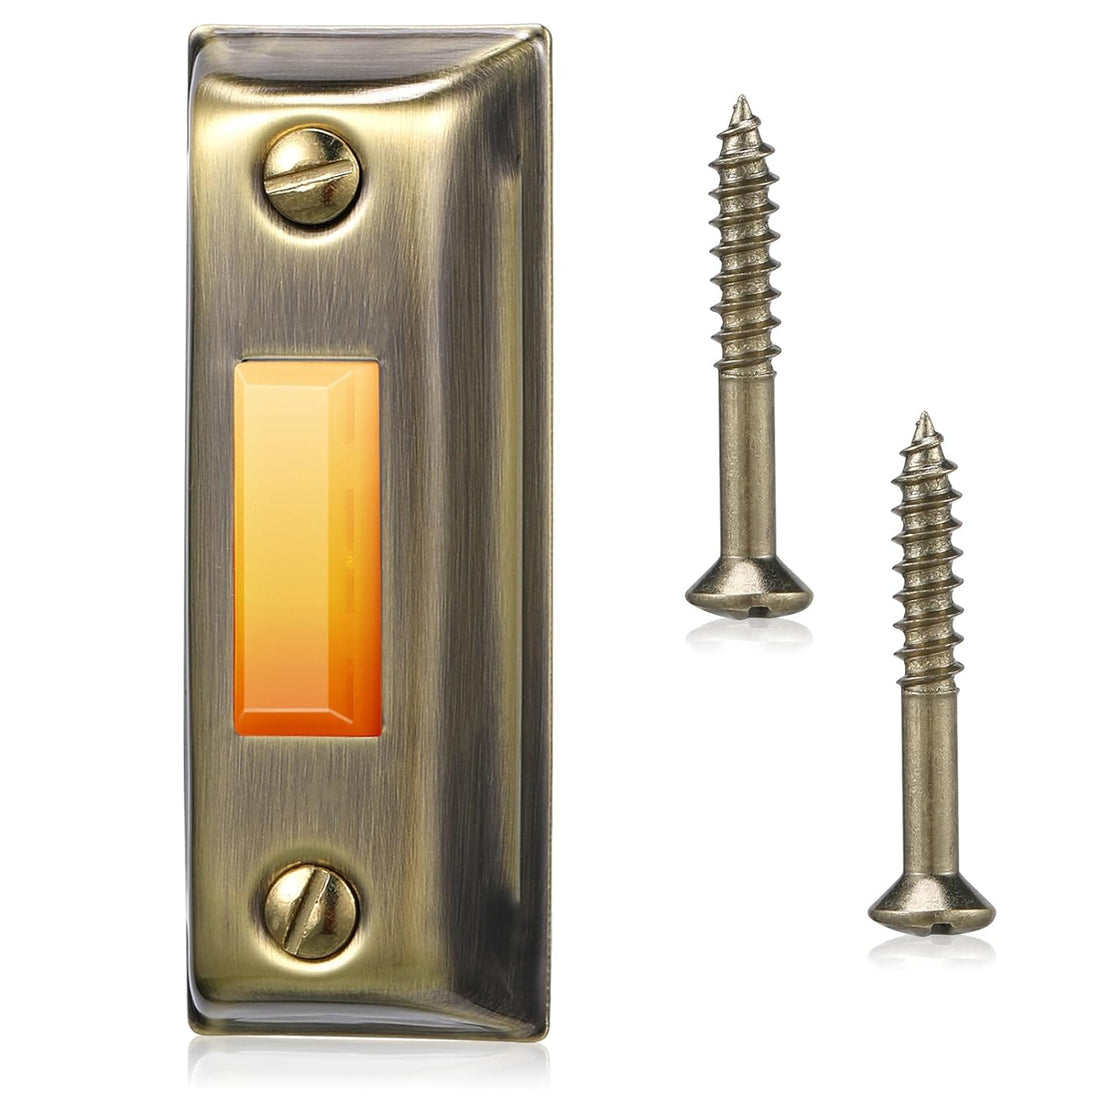 Metal Doorbell Button,Antique Brass Door Bell Push Button Lighted Wall Mounted Door Bell Button,Wired Replacement Garage Door Opener Button Switch for Home(Antique Brass)